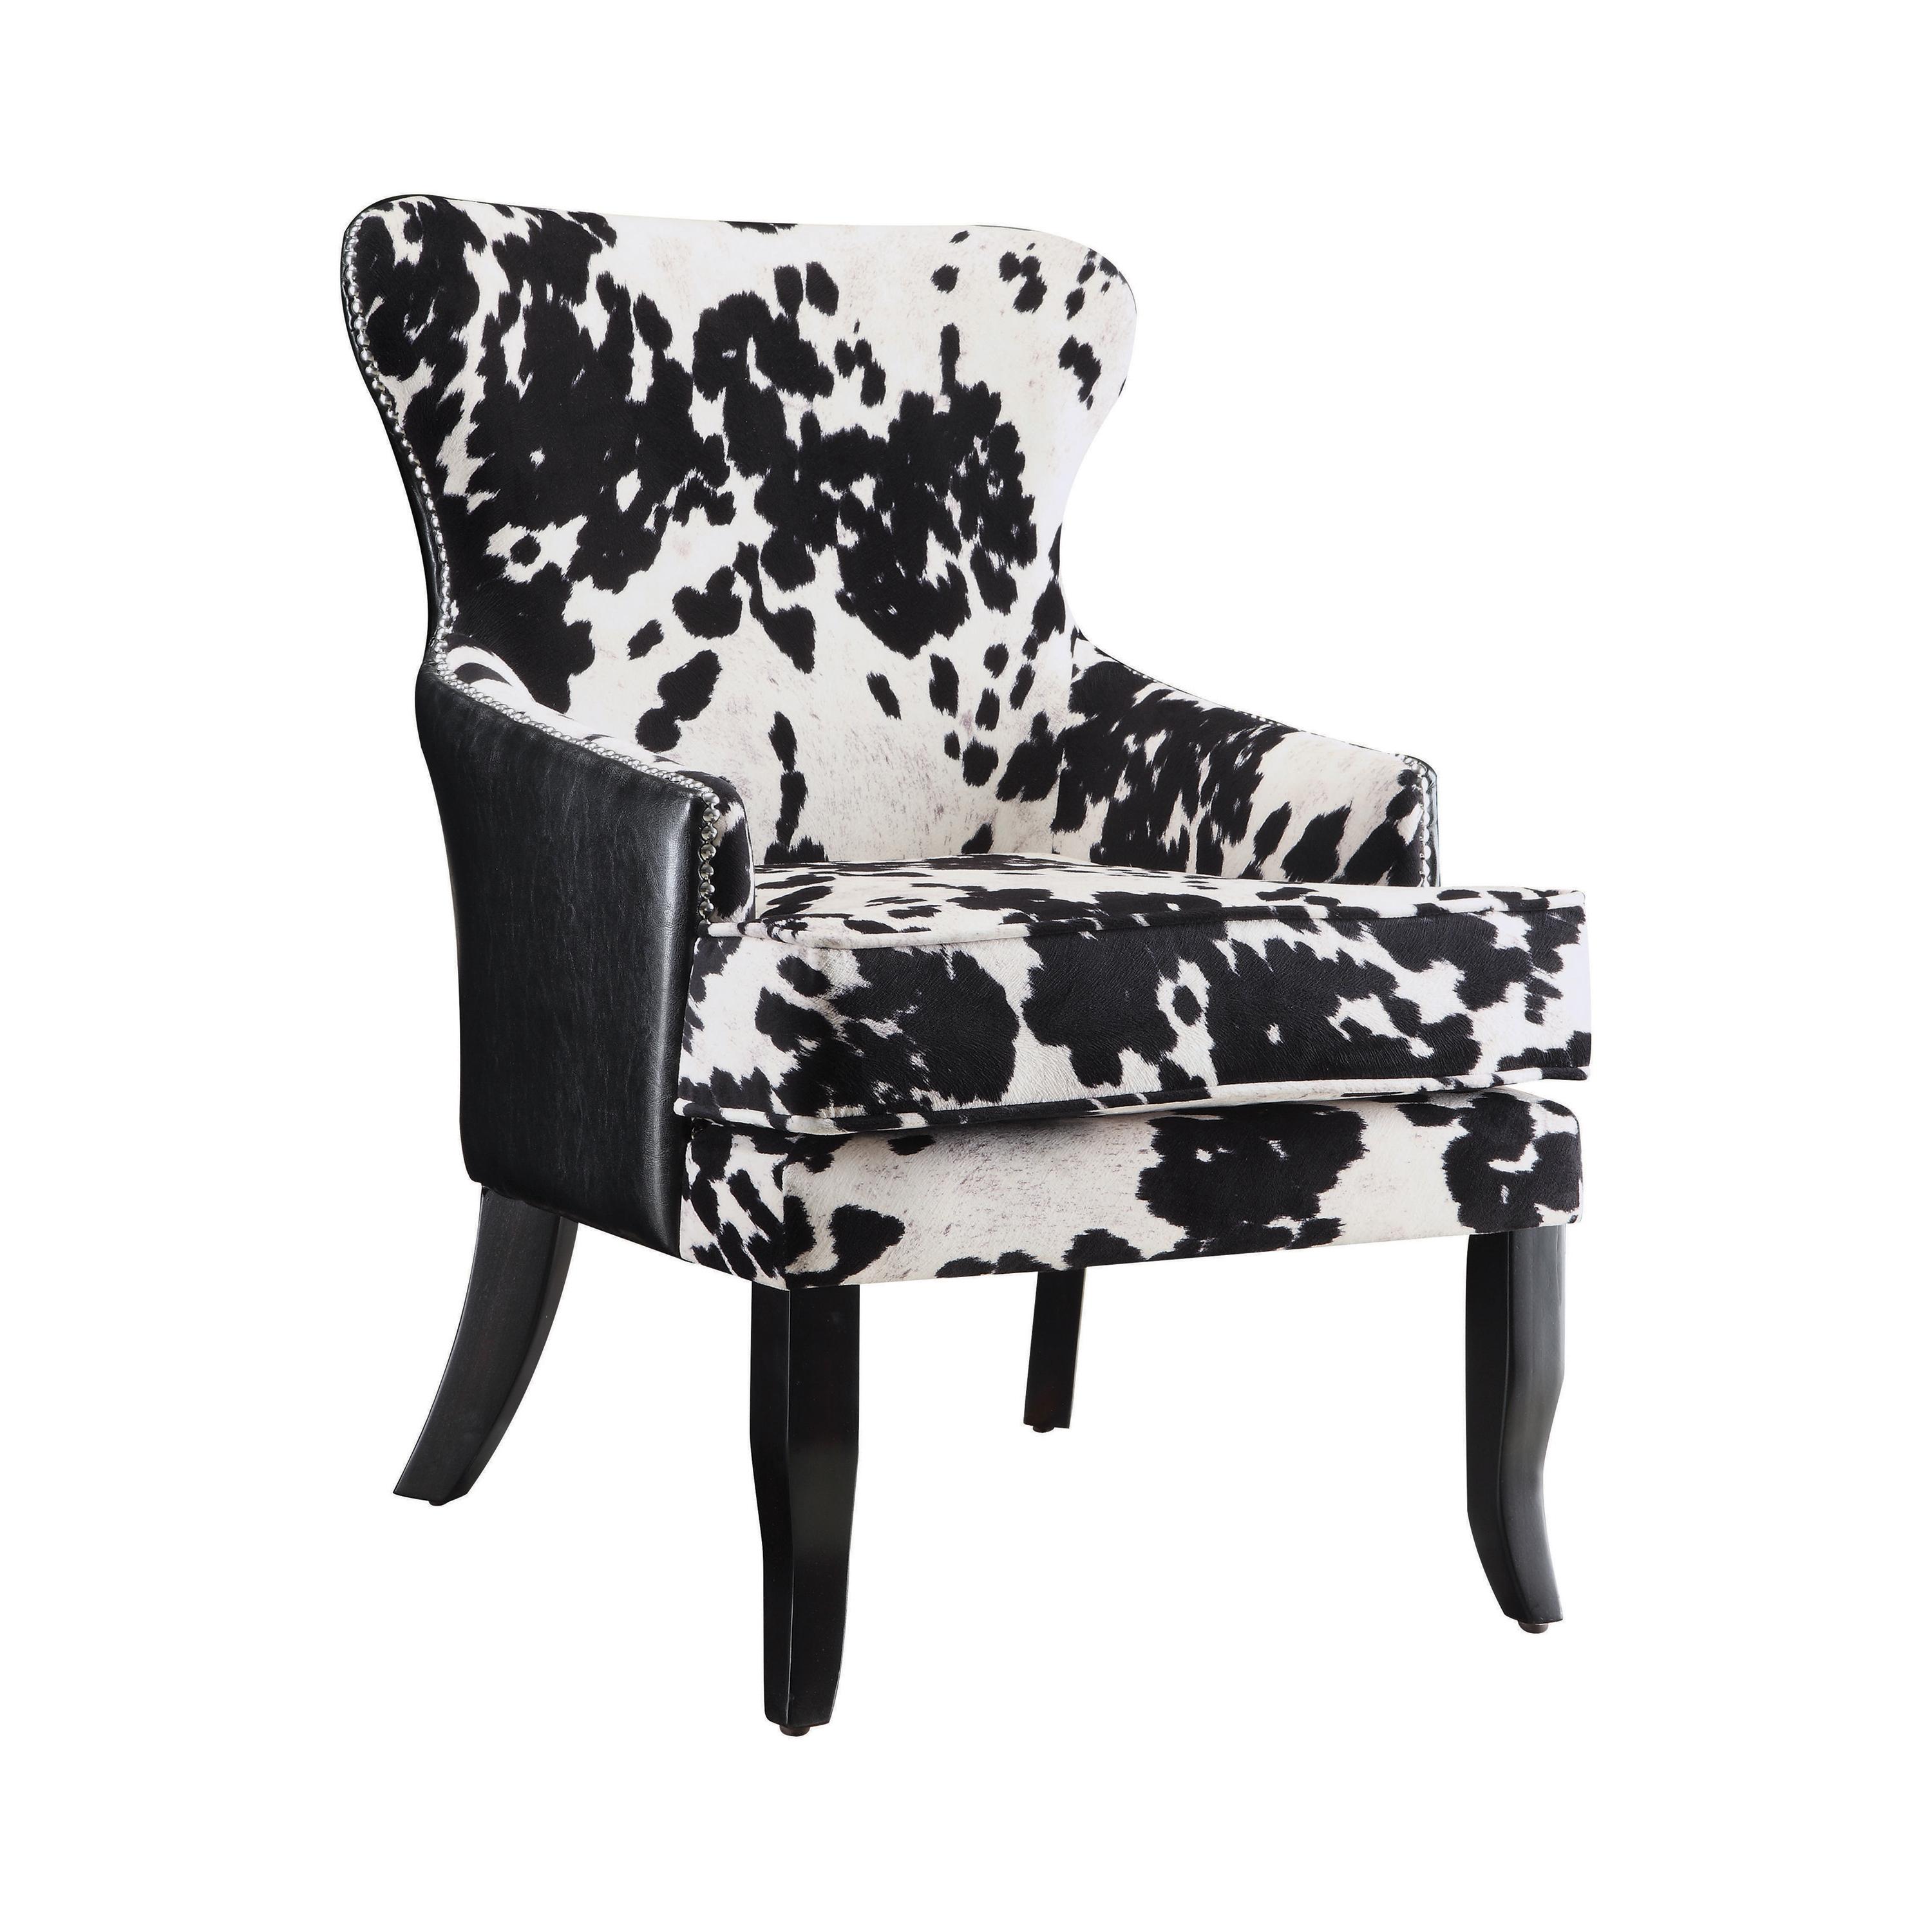 Contemporary Accent Chair 902169 902169 in White, Black Microfiber